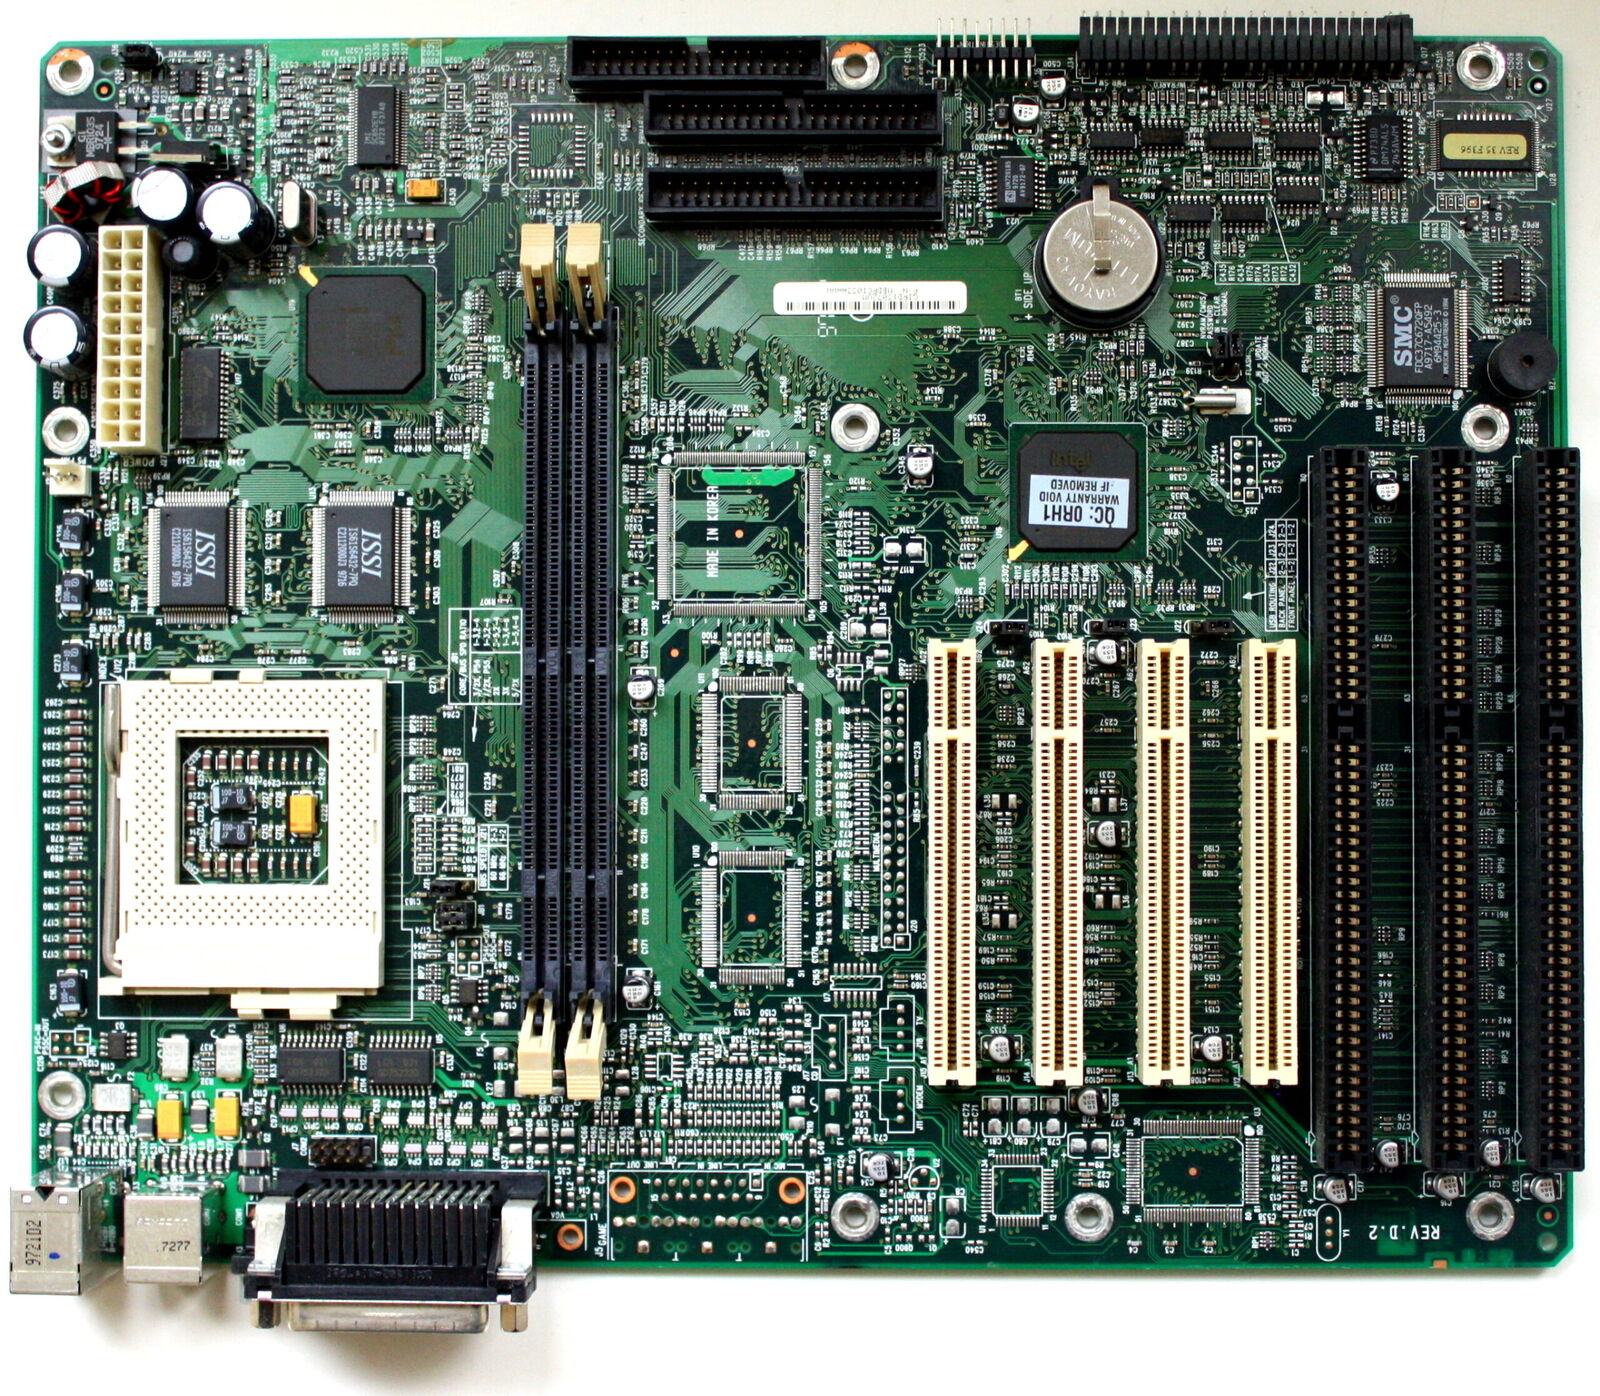 MOTHERBOARD, GATEWAY 586 UP TO 200-MHz W/ MMX , ATX, S/P/2USB,3X ISA, 3X PCI